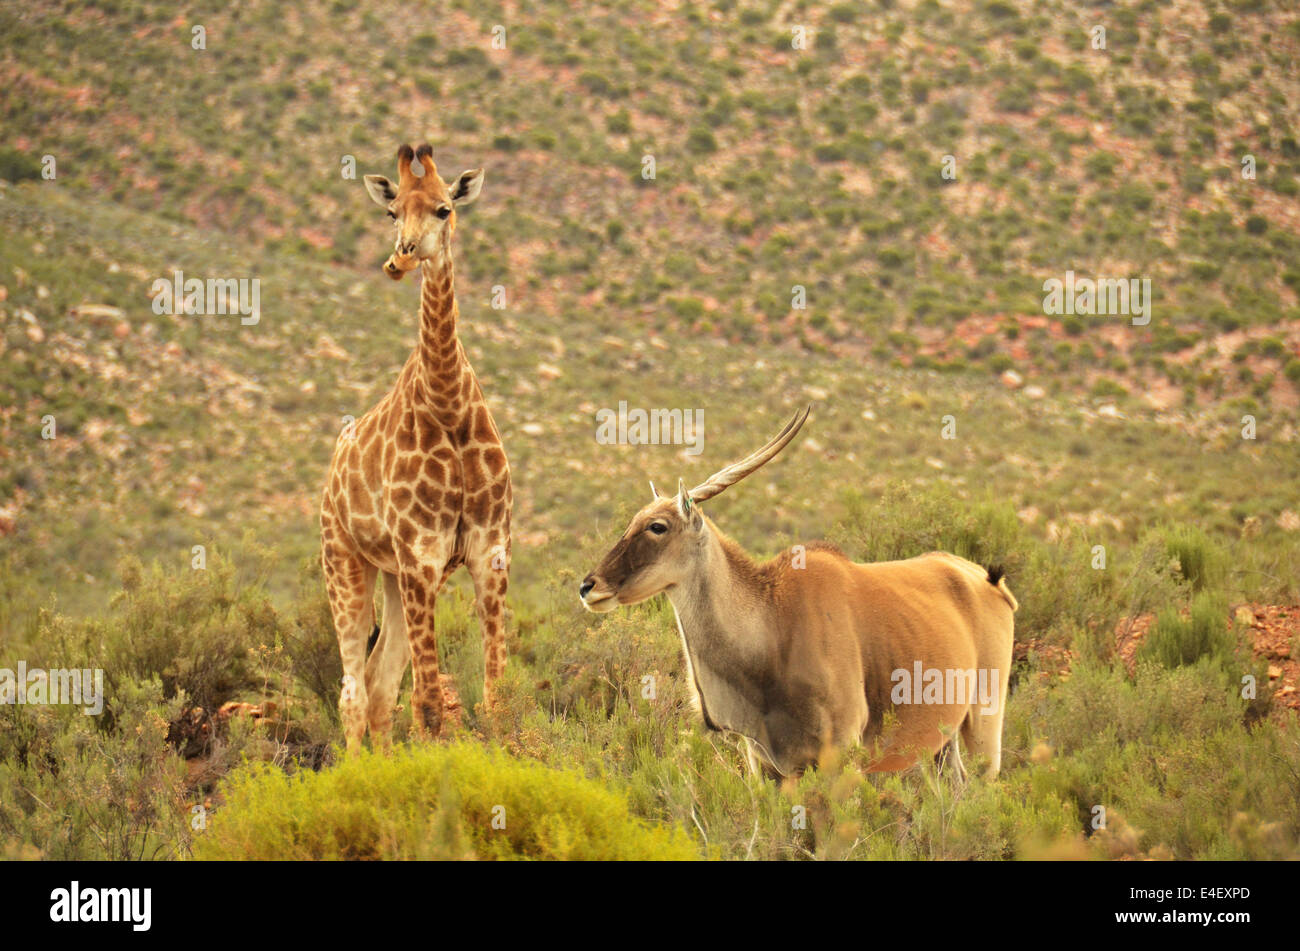 young giraffe and eland in scrub land Stock Photo